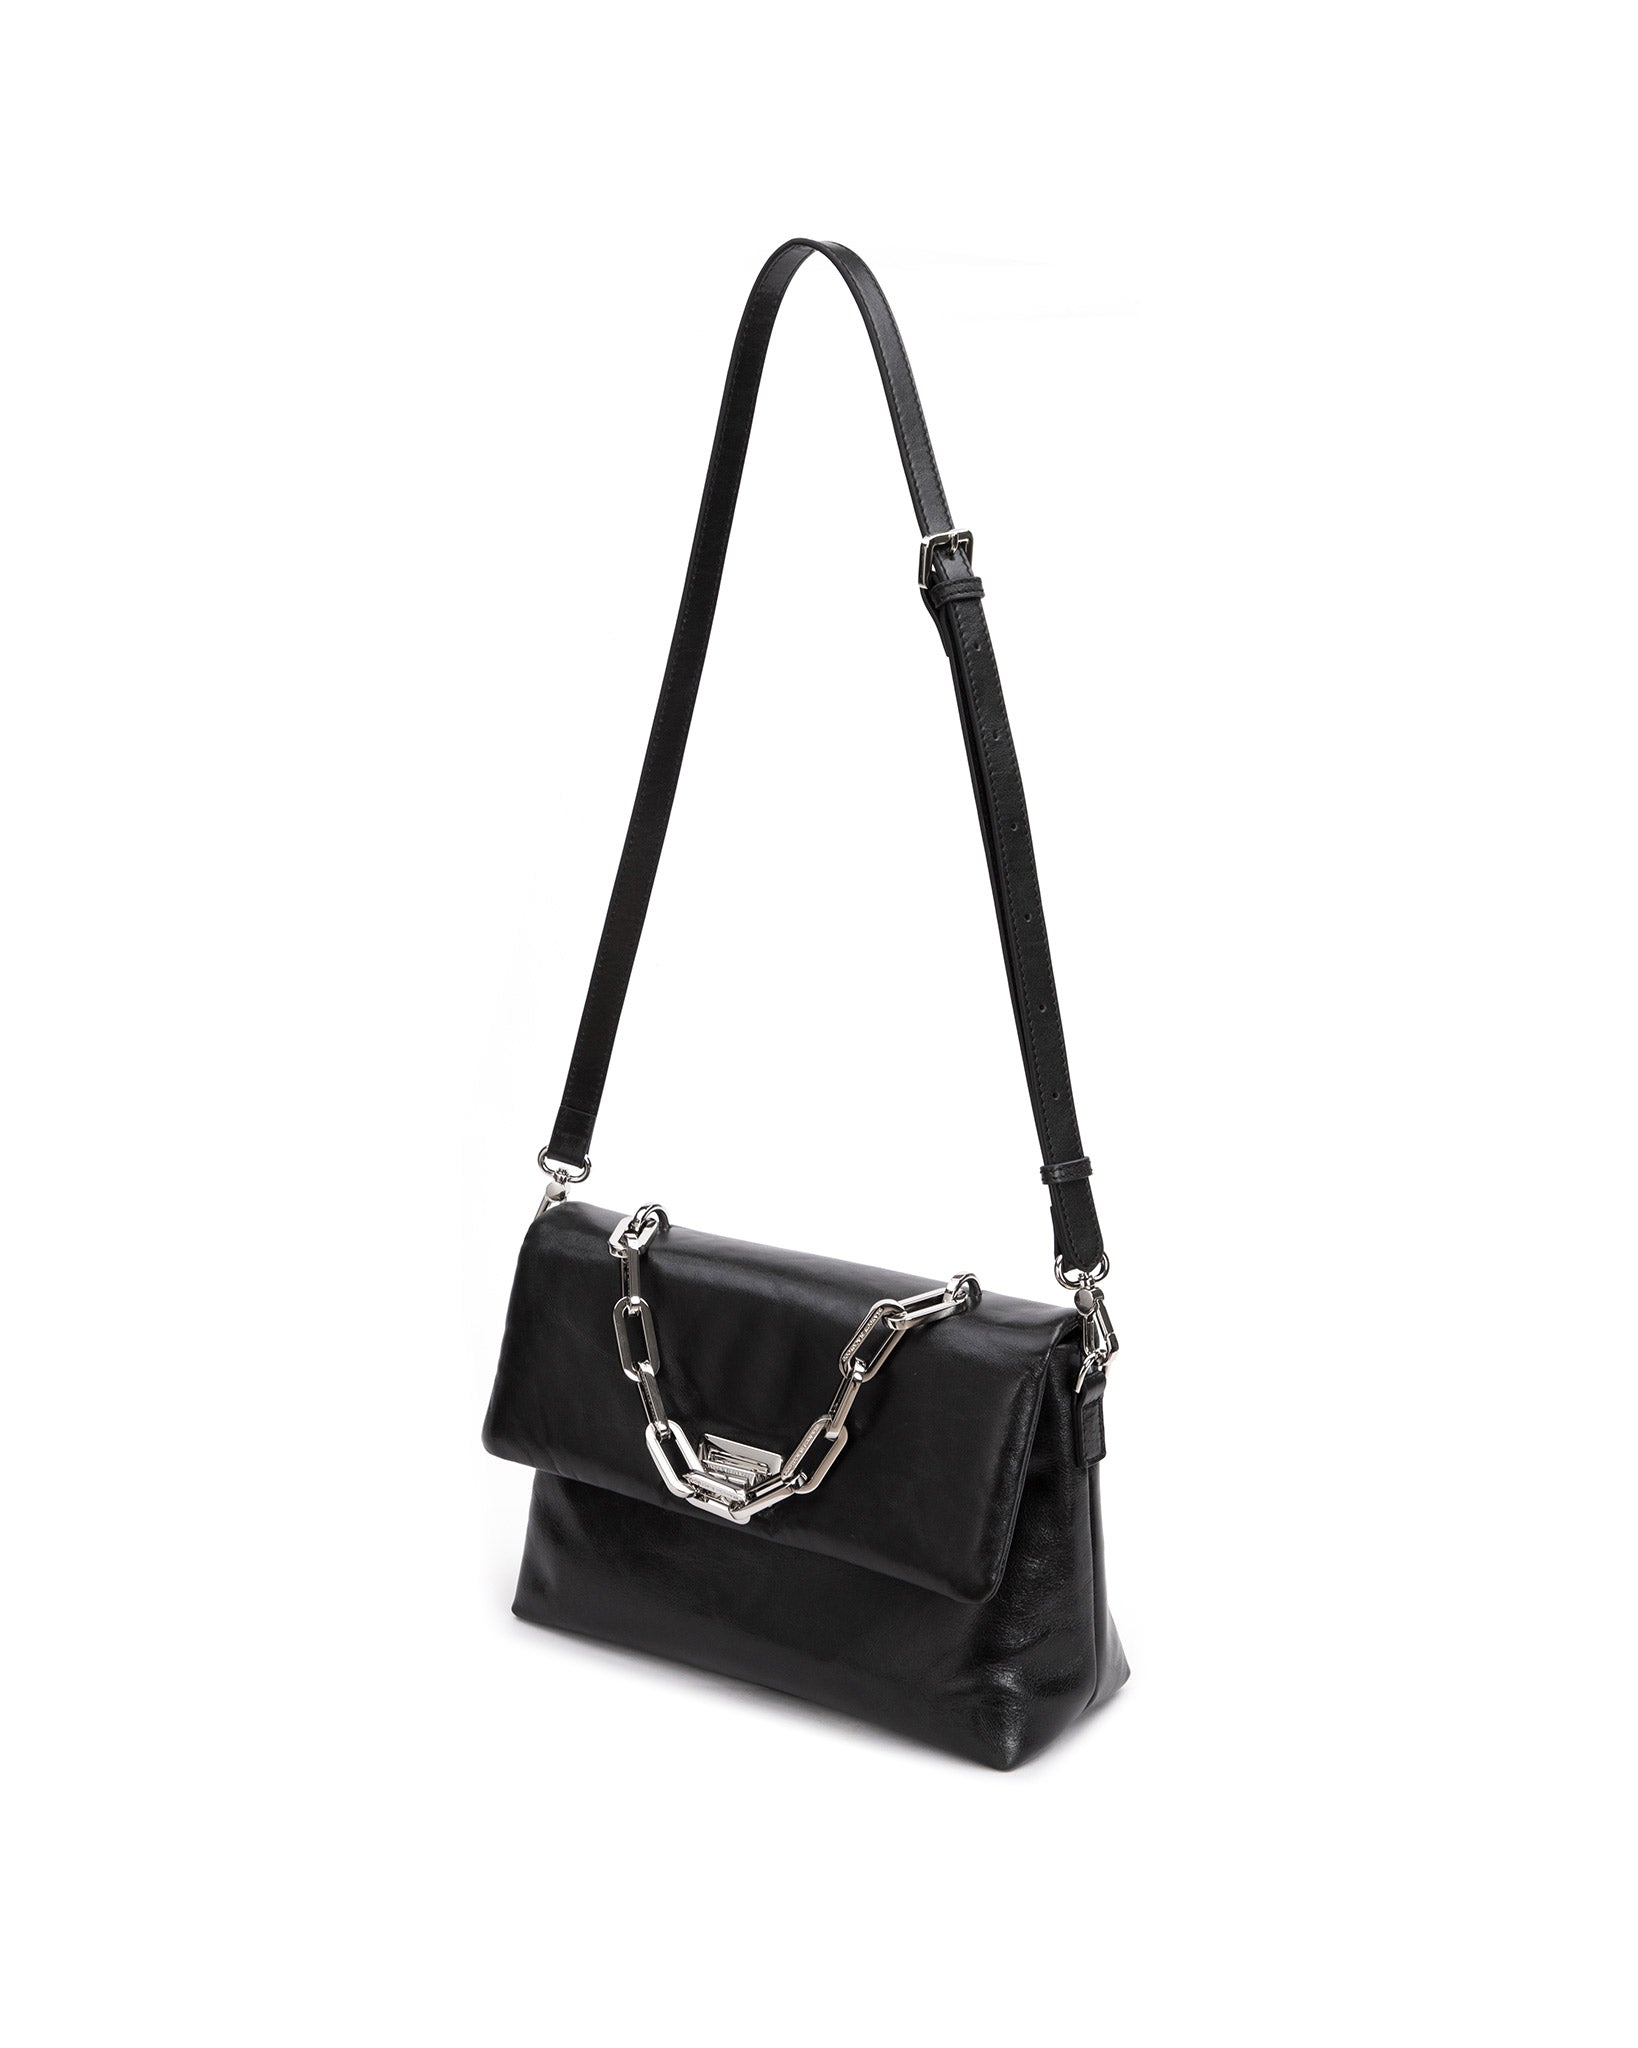 Black Handbag With Silver Hardware